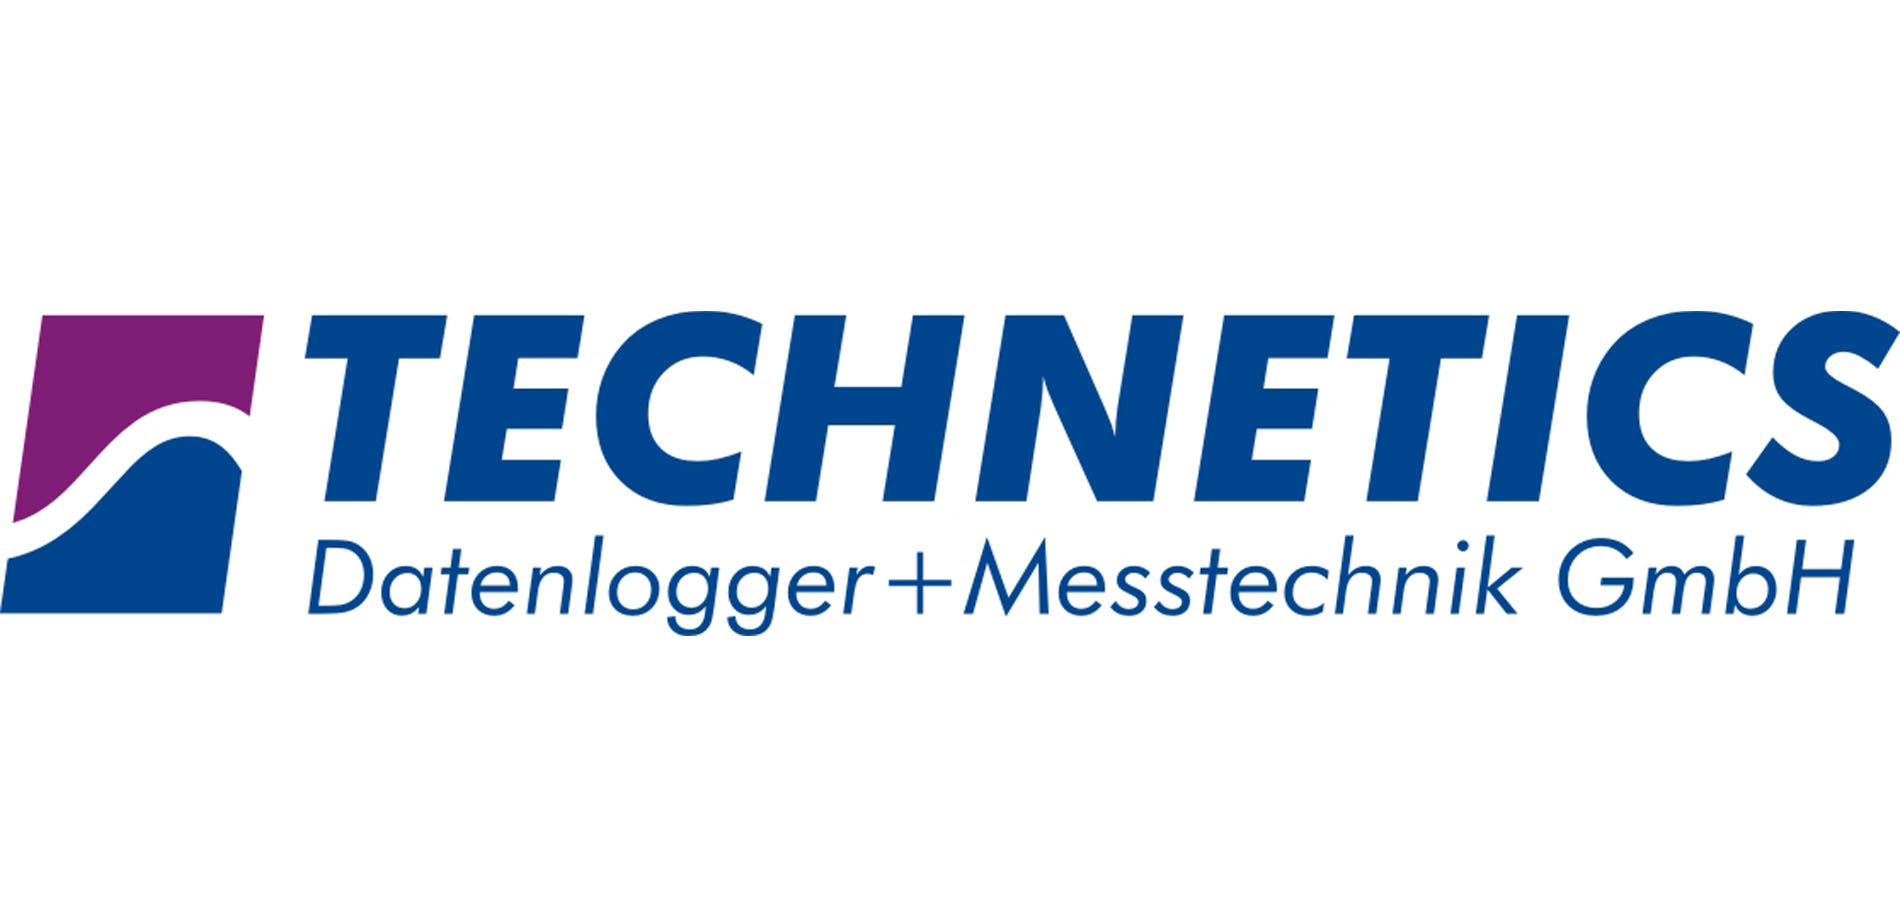 TECHNETICS Datenlogger+Messtechnik GmbH